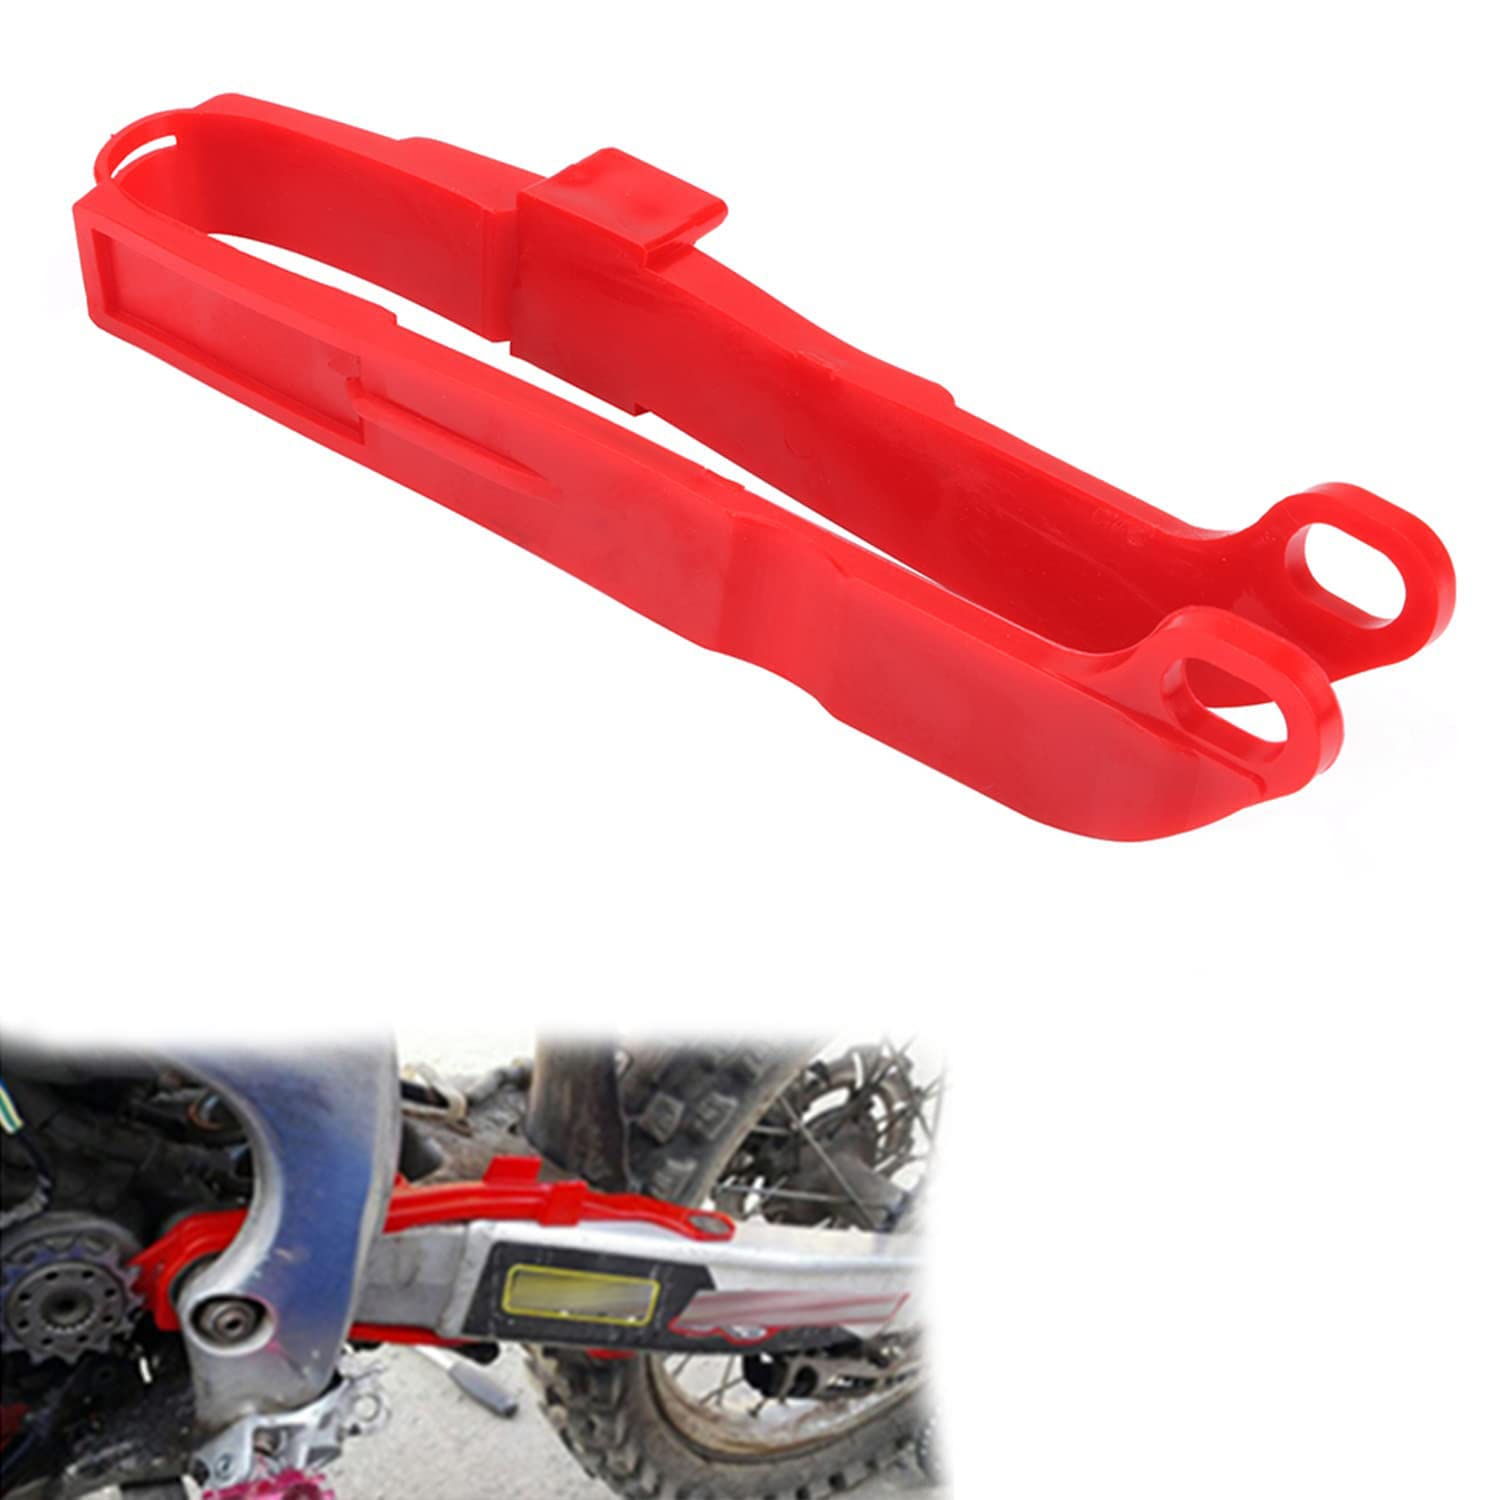 Motorrad rote Kunststoffkette Slider Guide Protector für XR250R 1991-2004 XR400R 1996-2004 XR600R 1991-2000 XR650L 1993-2019 von AnXin